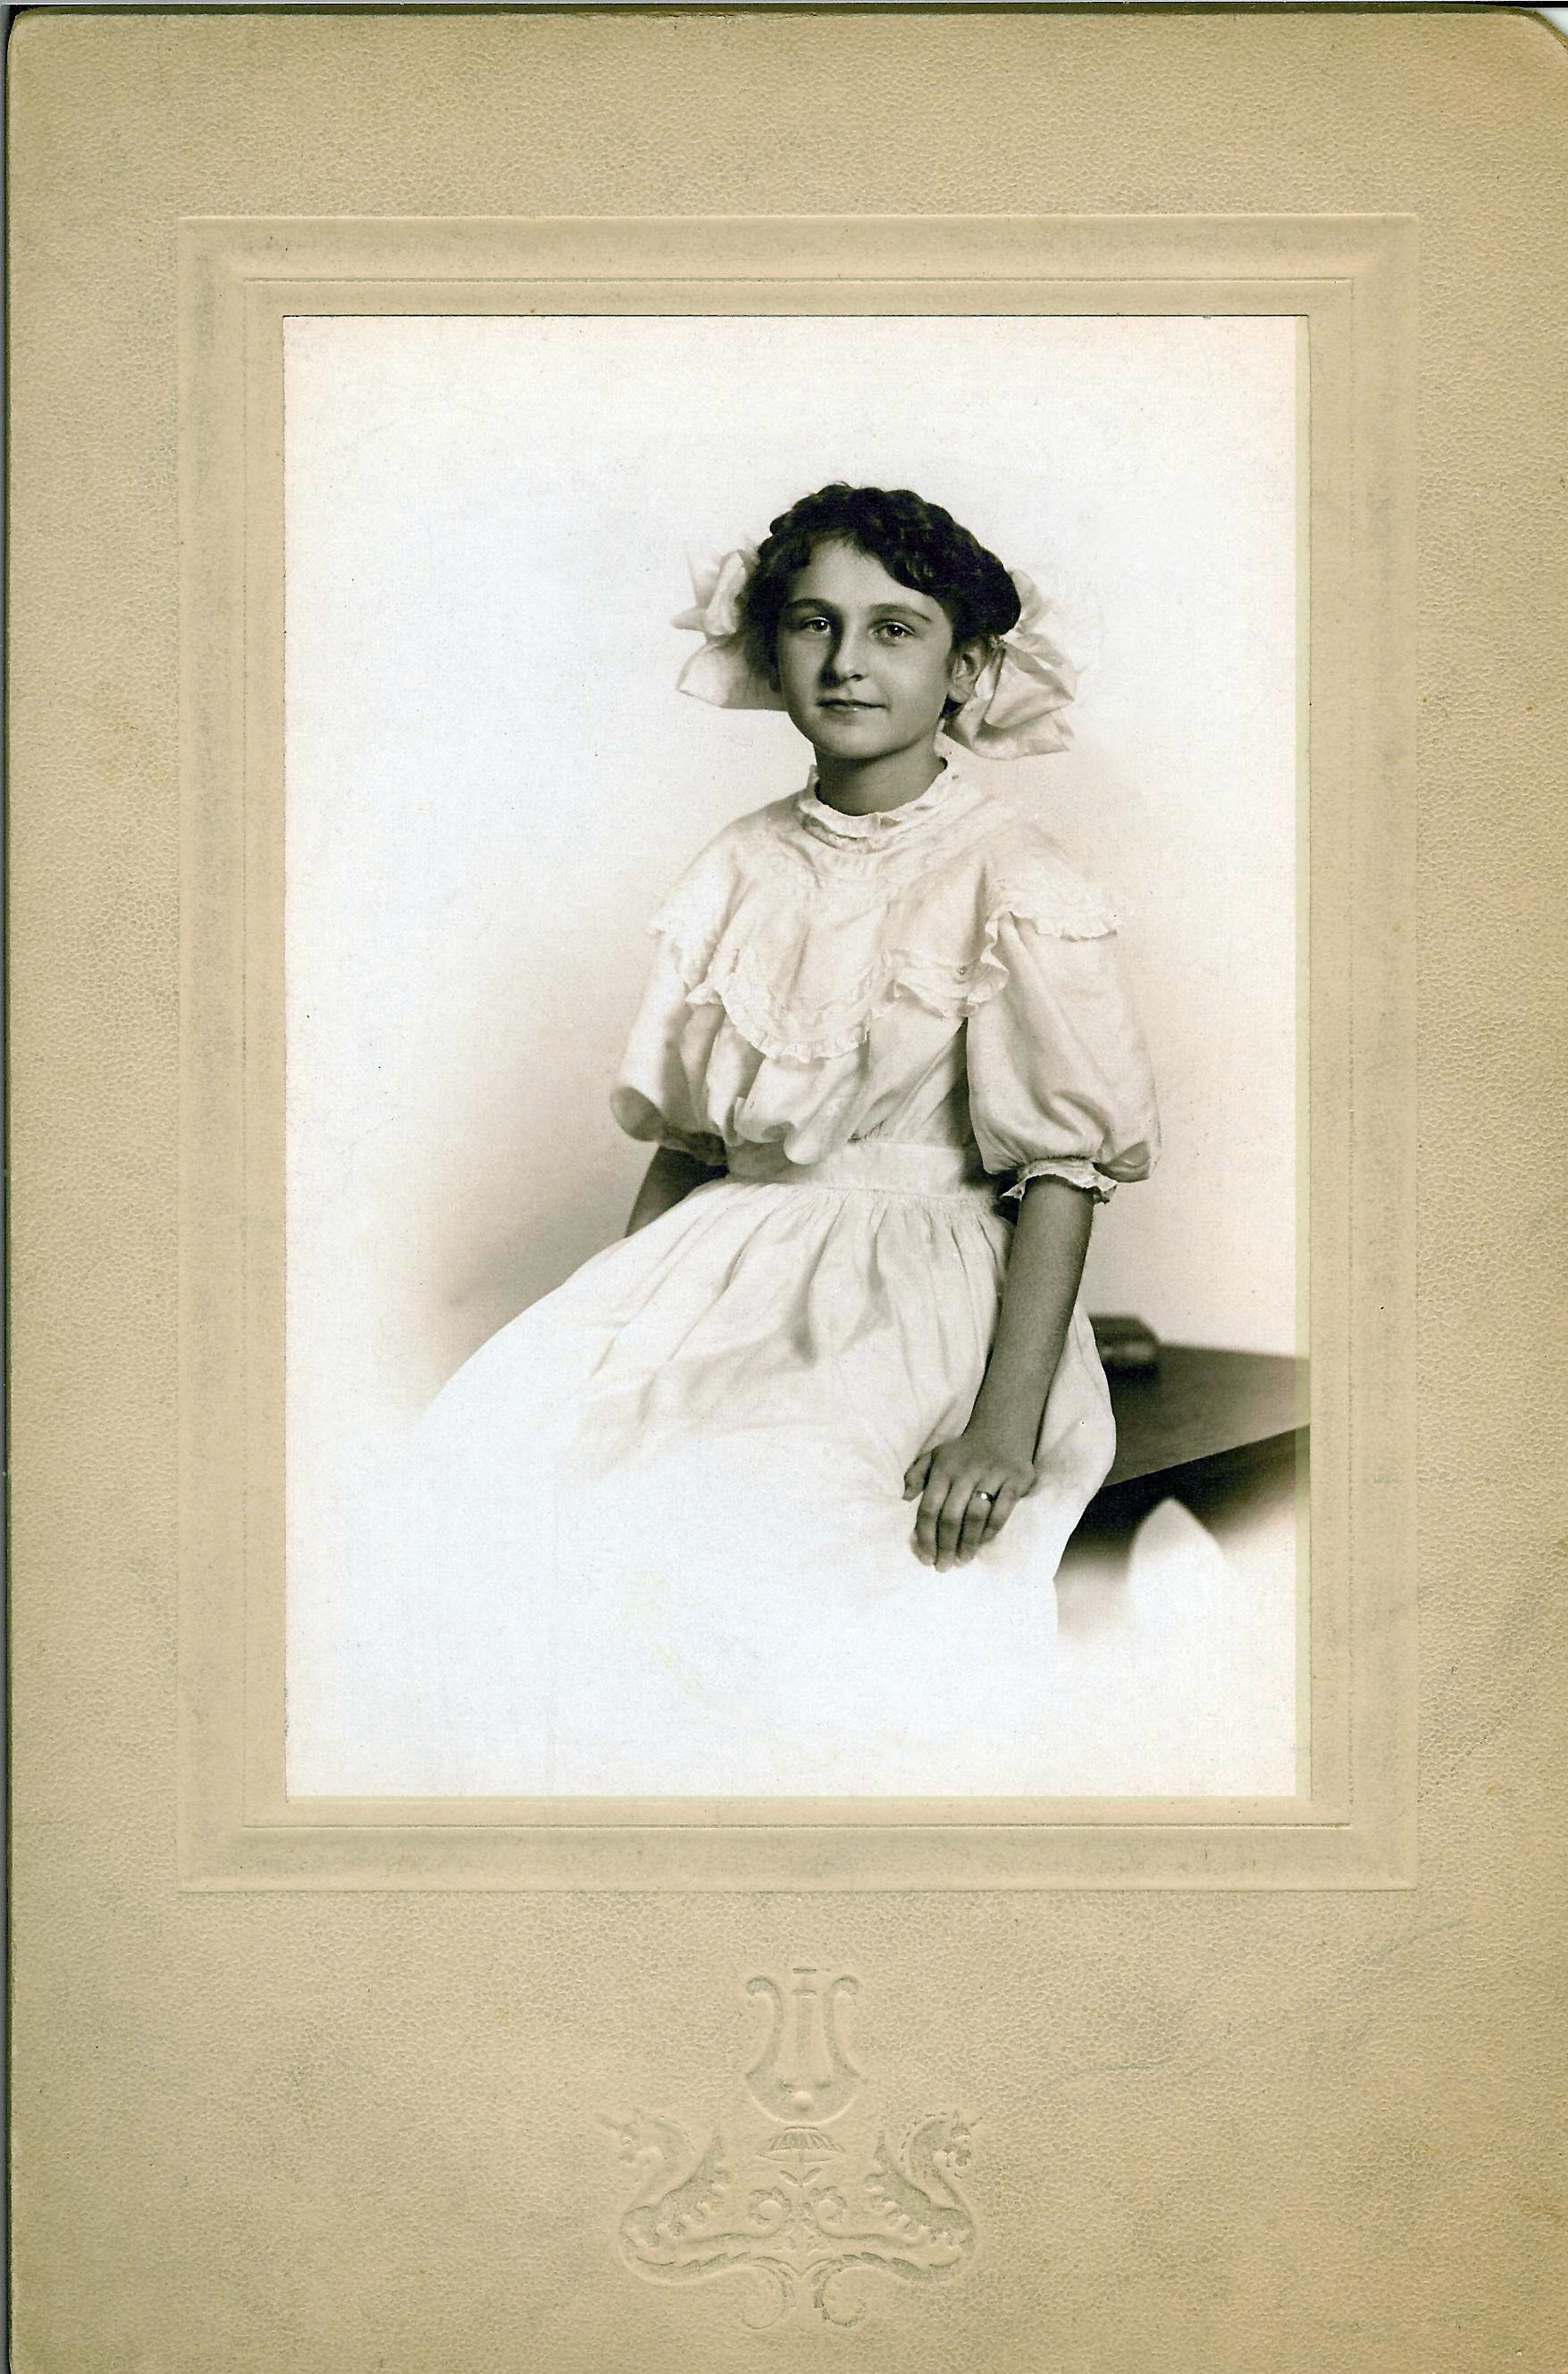 Photo of Laura M. Jones as a girl.